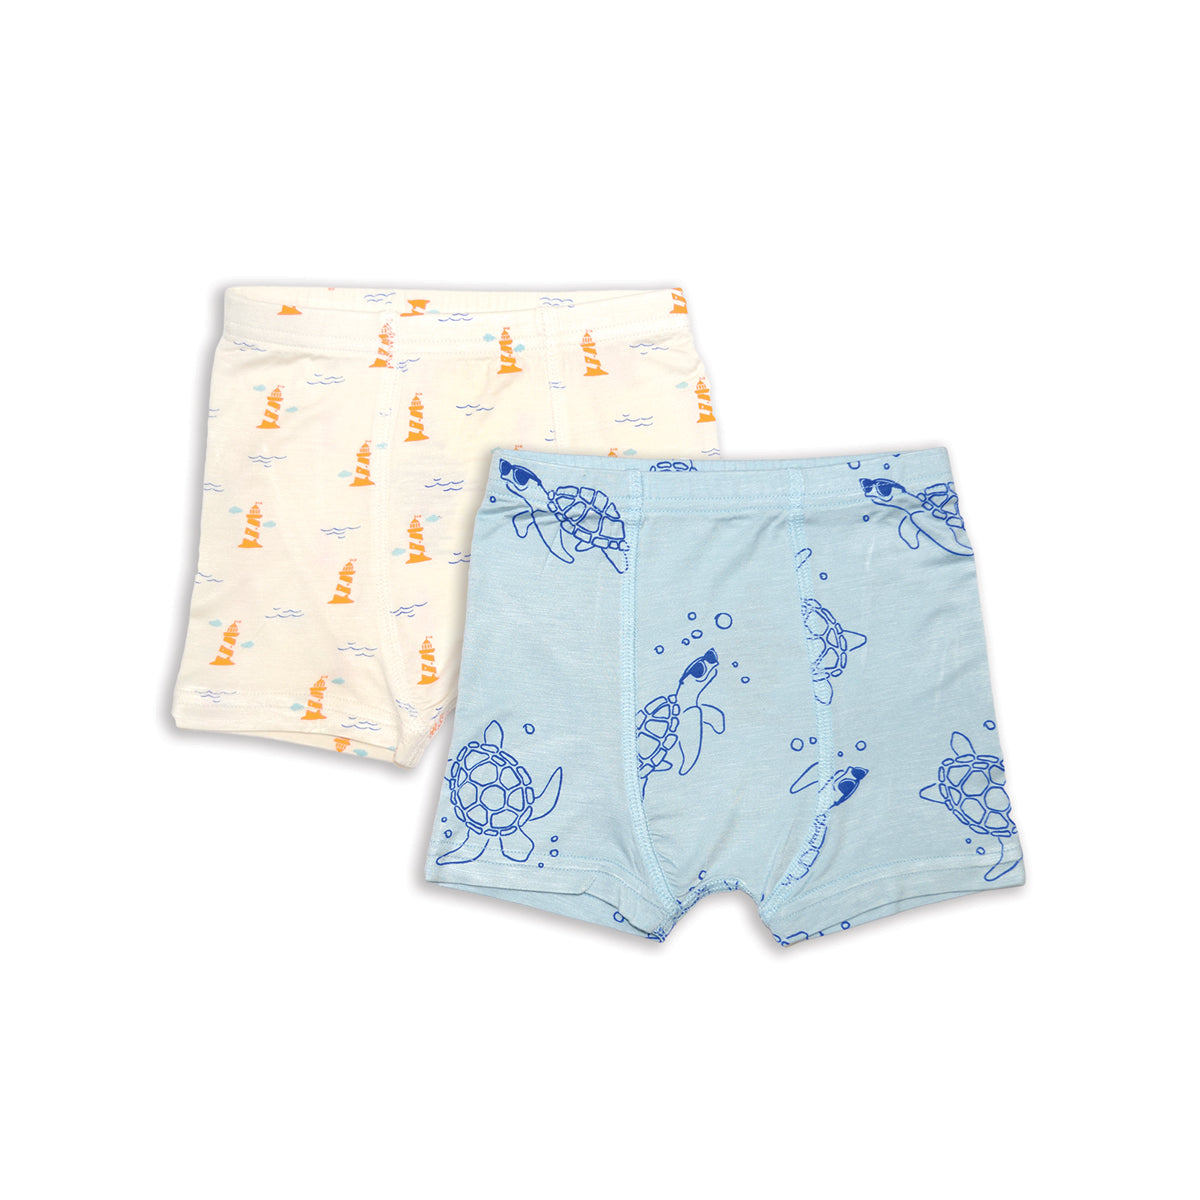 🌮 Bamboo Boyshort Underwear, For Life's Adventures